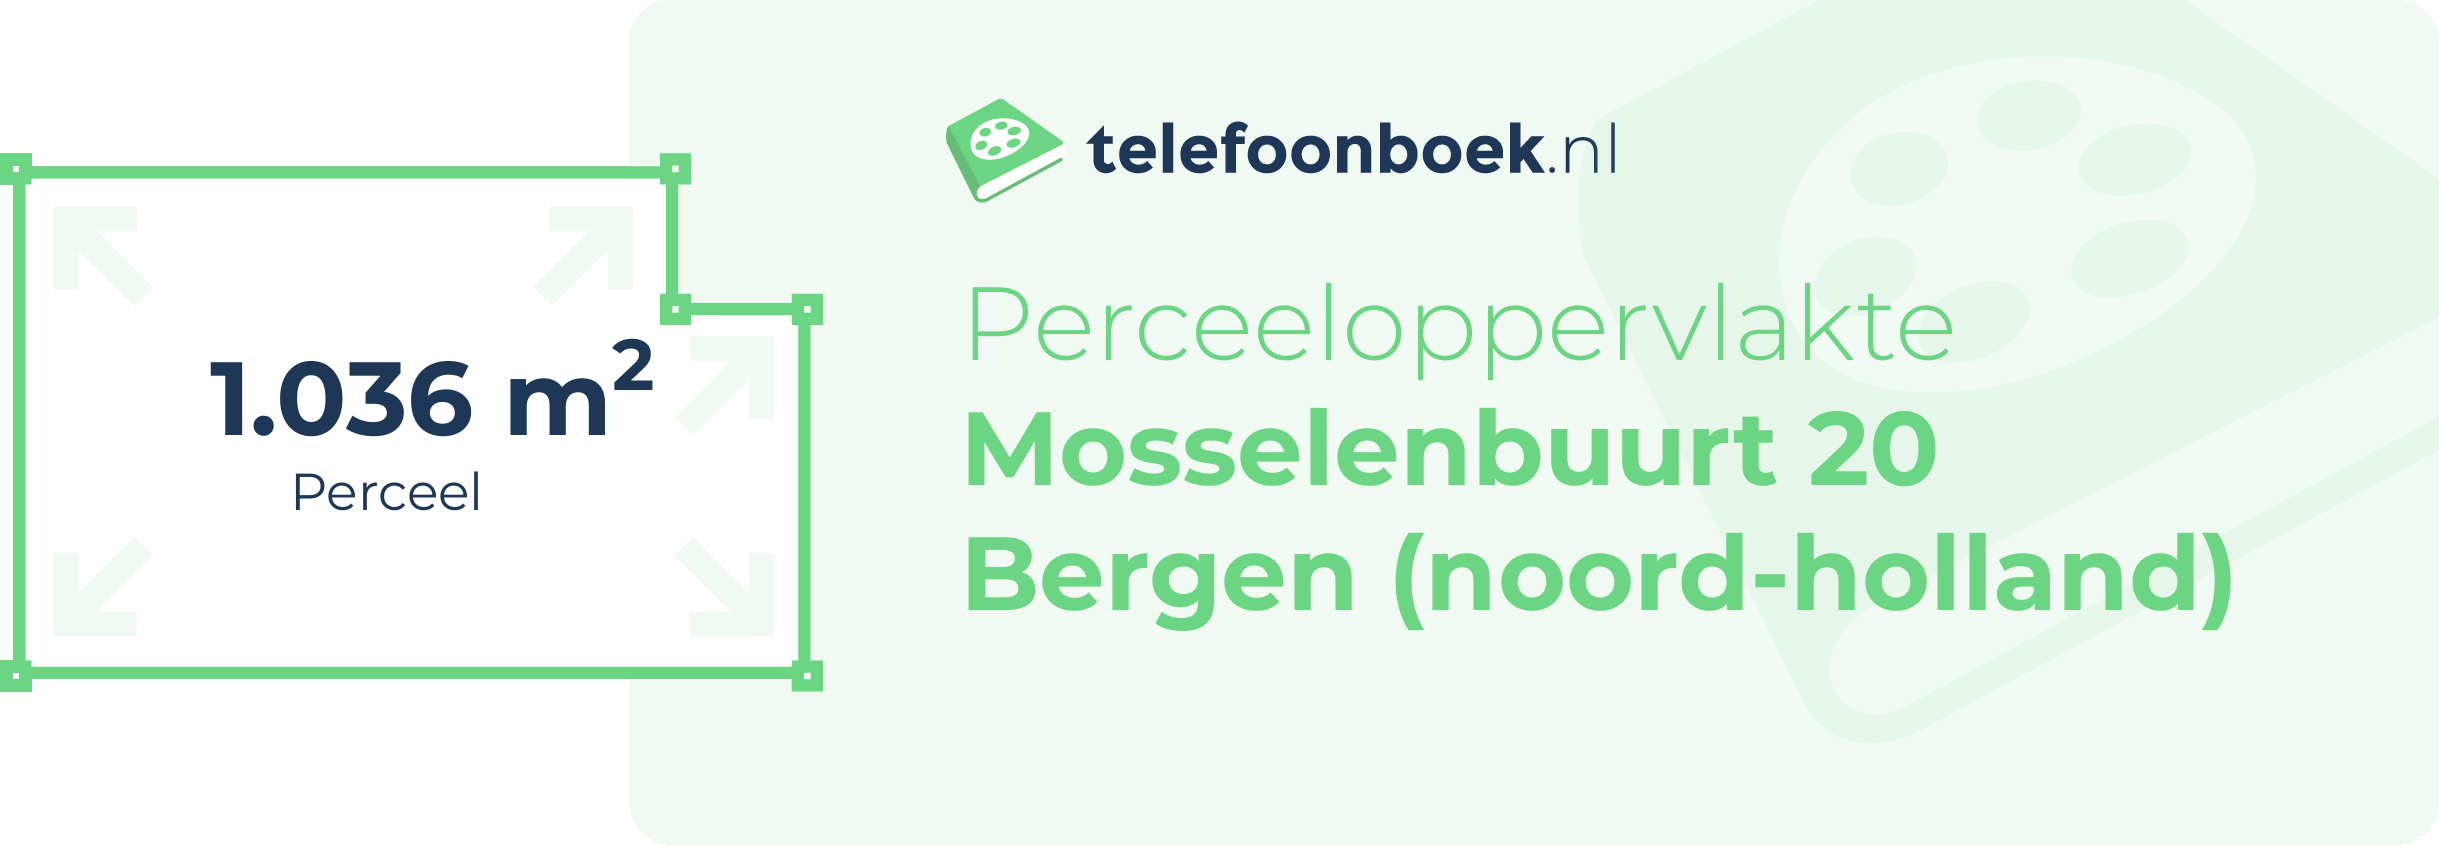 Perceeloppervlakte Mosselenbuurt 20 Bergen (Noord-Holland)